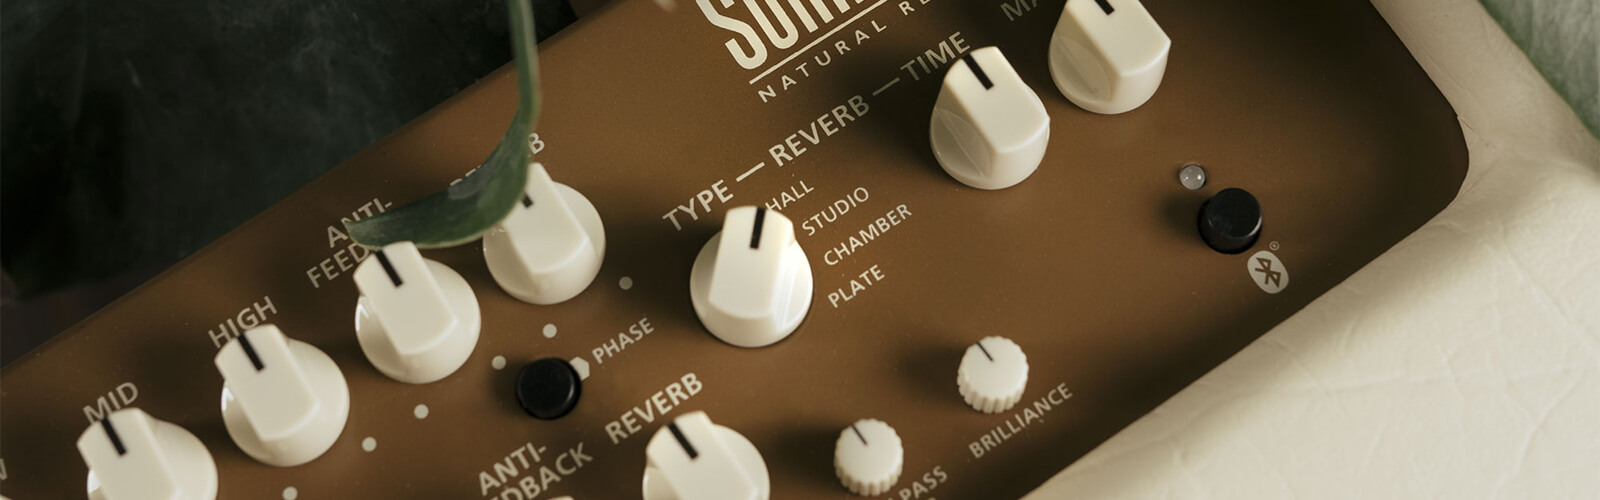 Sonnet 120 Blonde guitar amp close up of controls